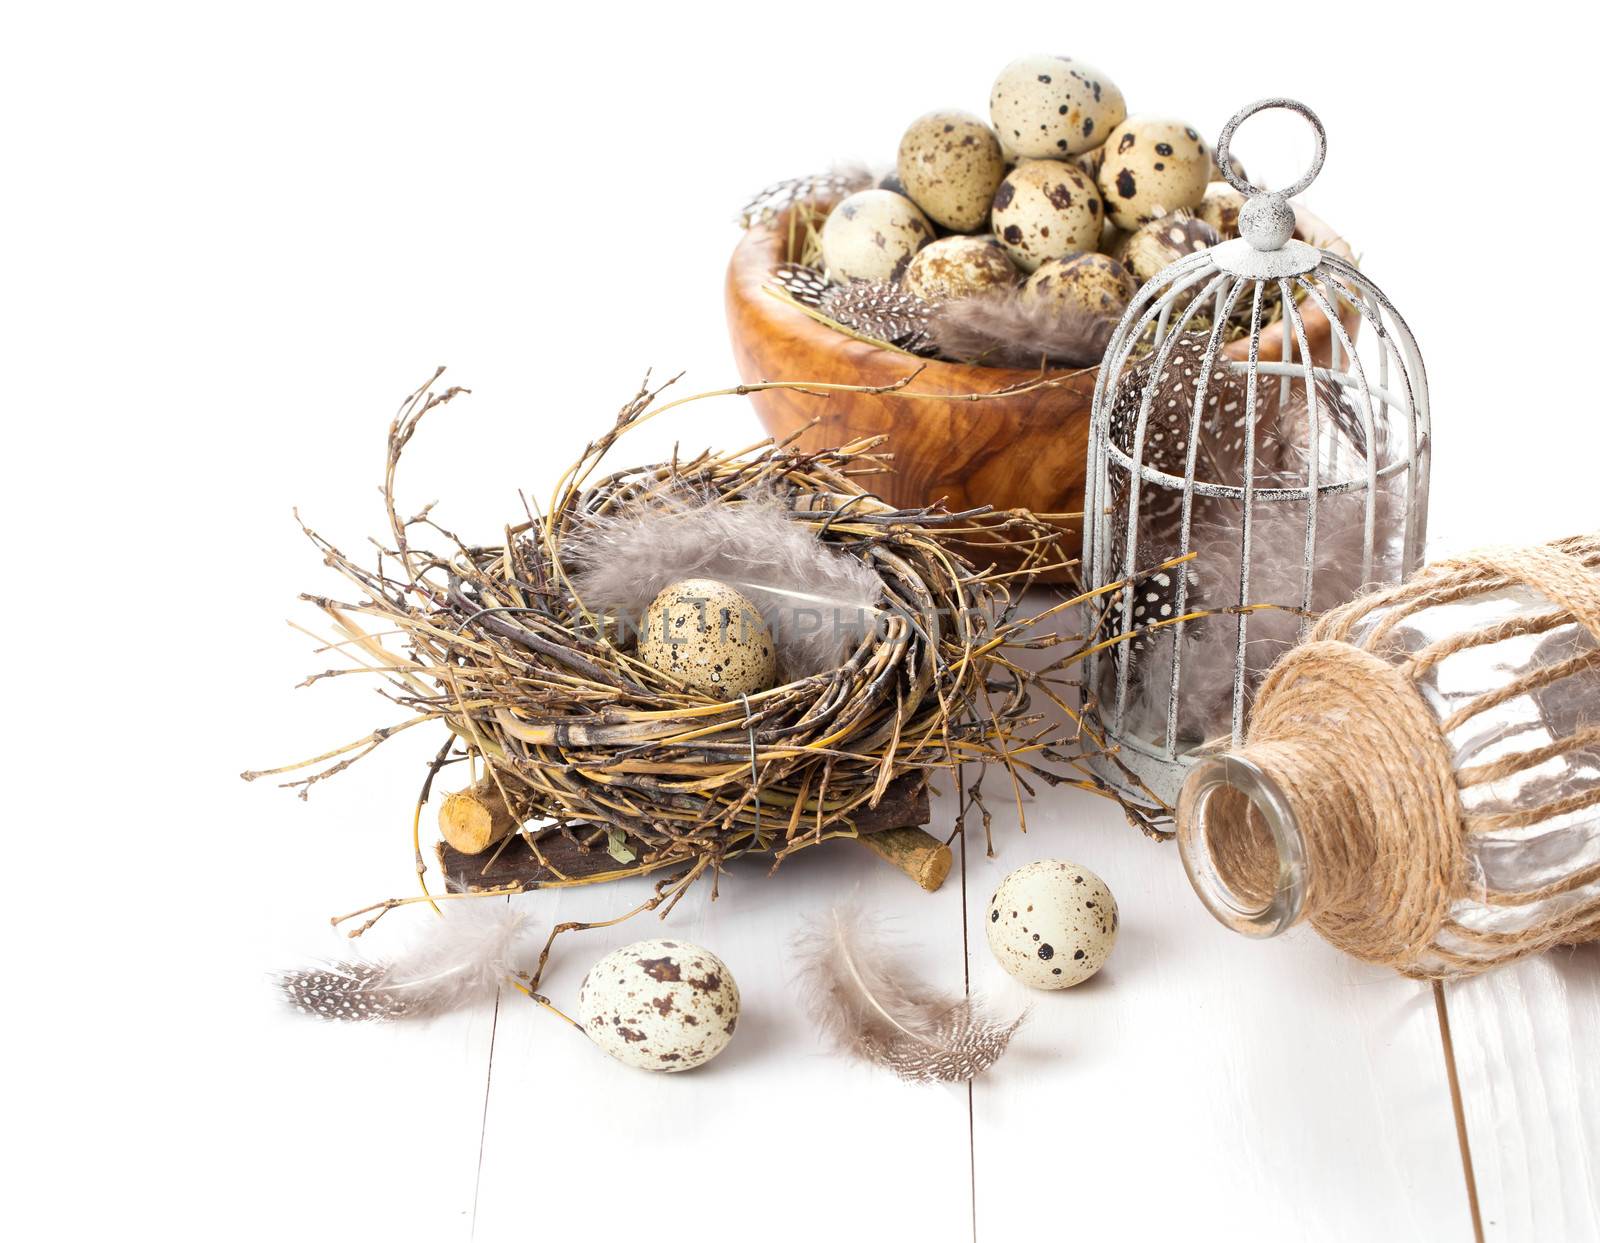 quail eggs on white wooden background